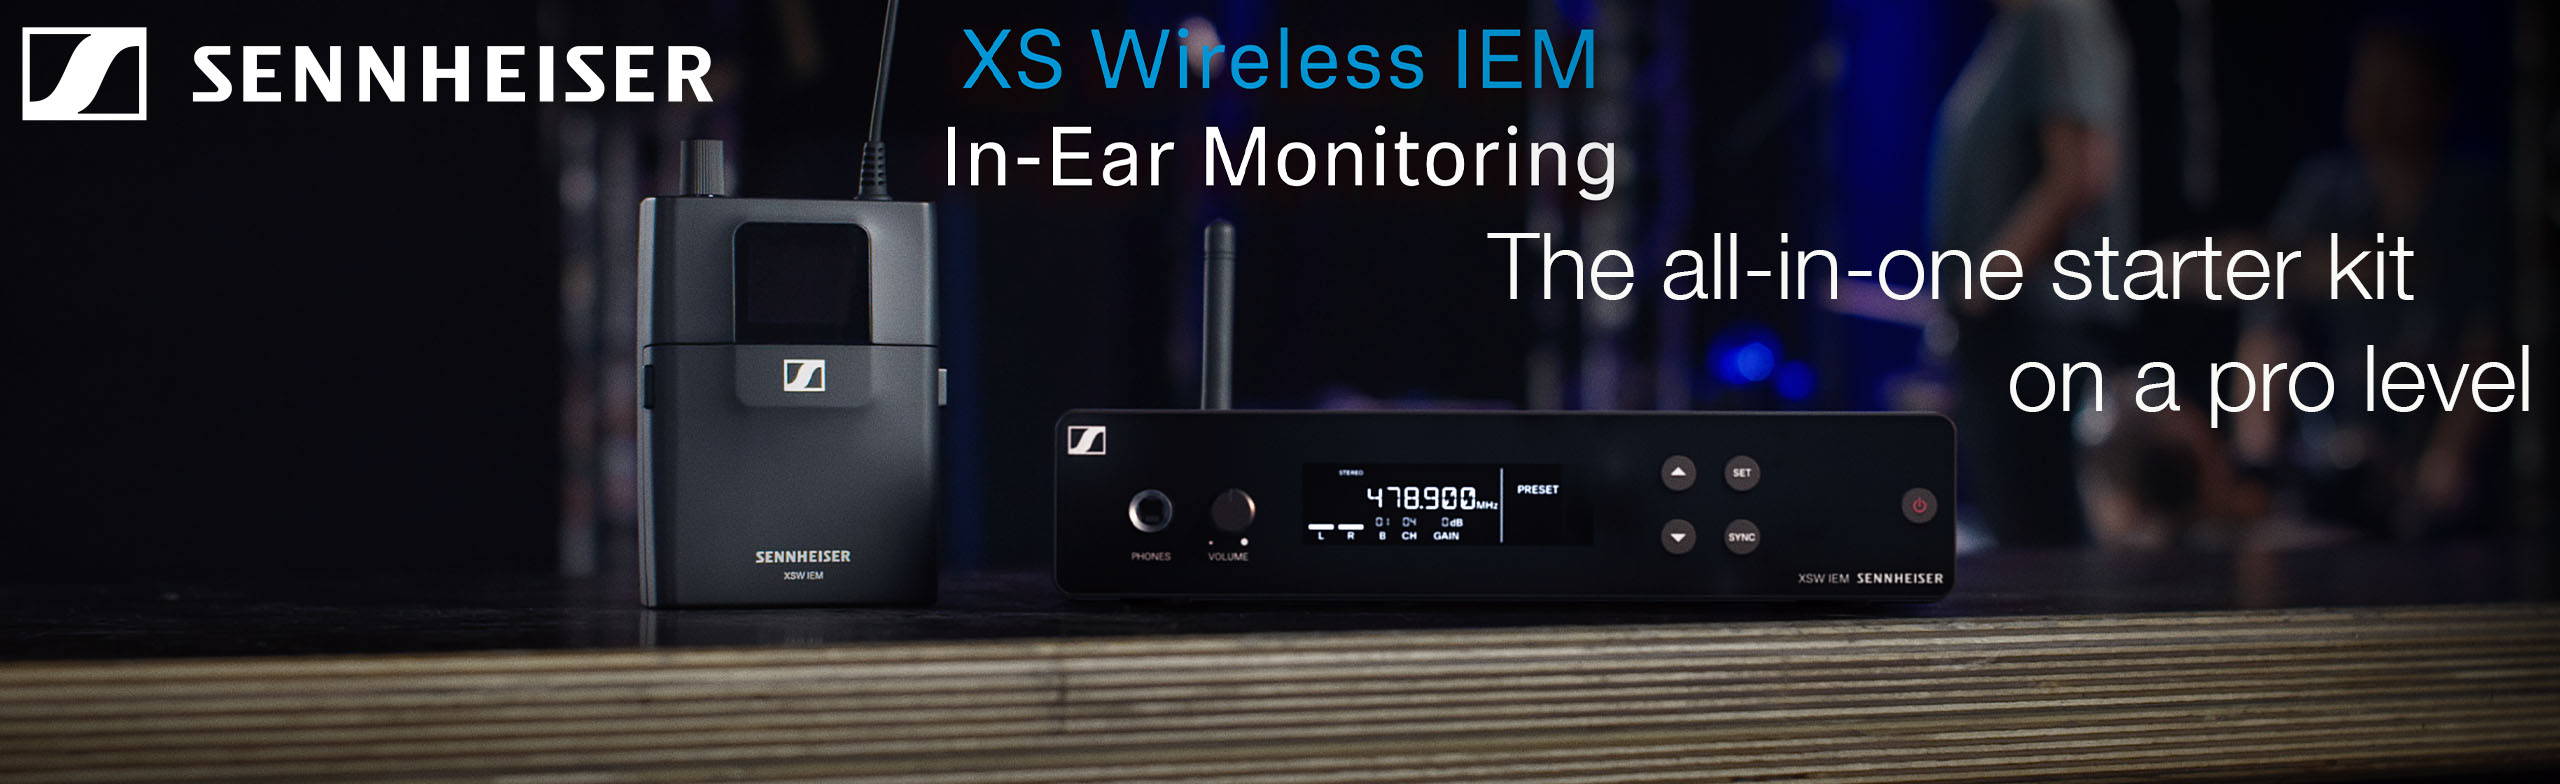 Sennheiser xs wireless iem in-ear monitoring the all-in-one starter kit on a pro level 